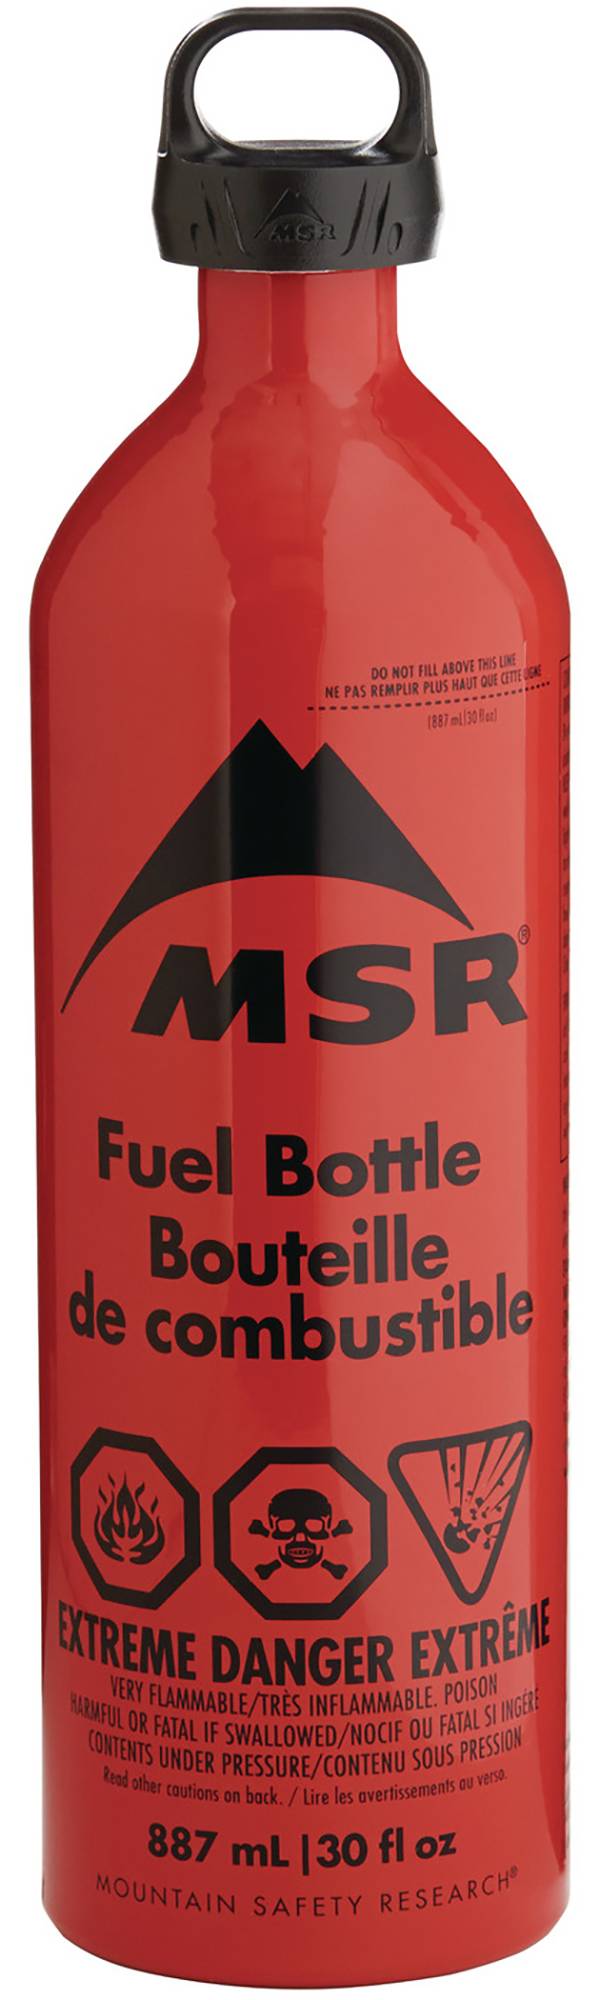 MSR 33 oz. Liquid Fuel Bottle product image